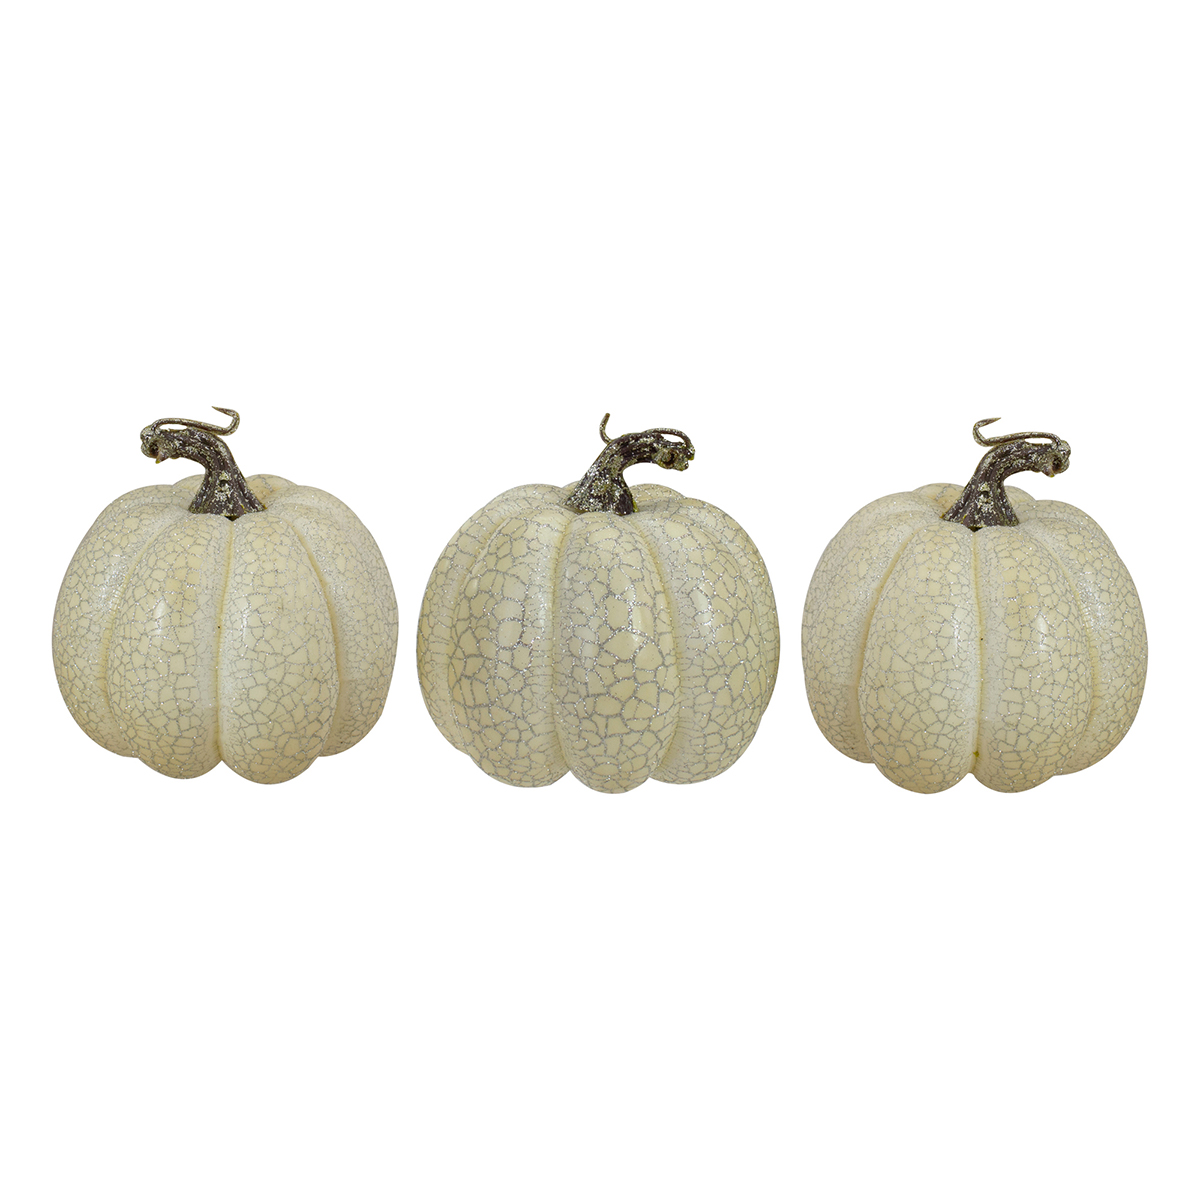 Northlight Seasonal Artificial White Harvest Pumpkins - Set Of 3